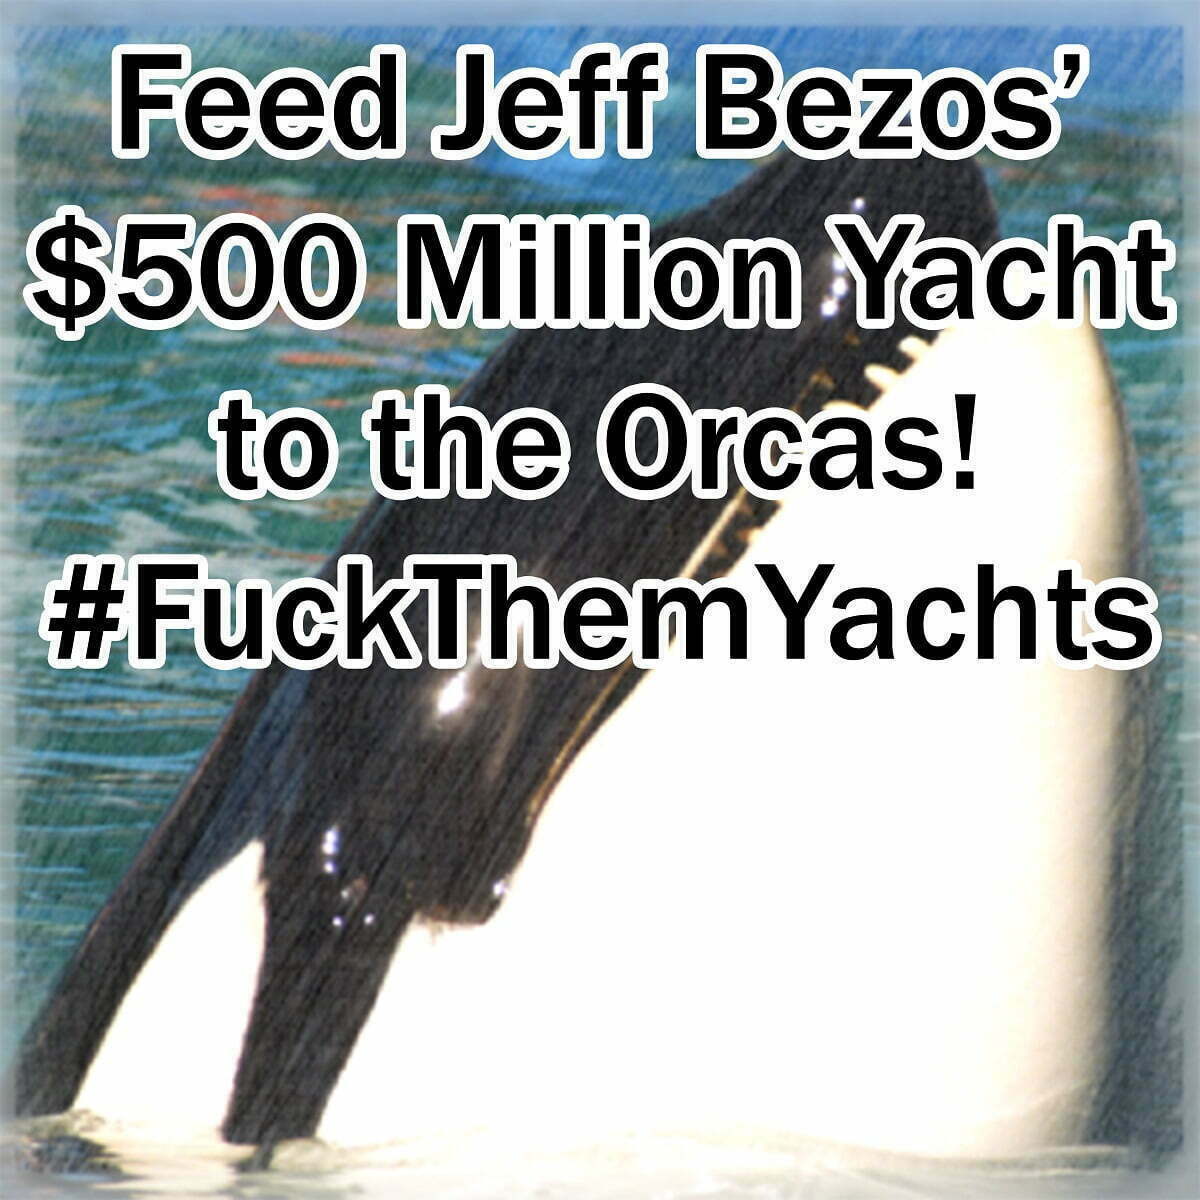 Feed Amazon billionaire Jeff Bezos' $500 million Yacht to the Orcas! #FuckThemYachts